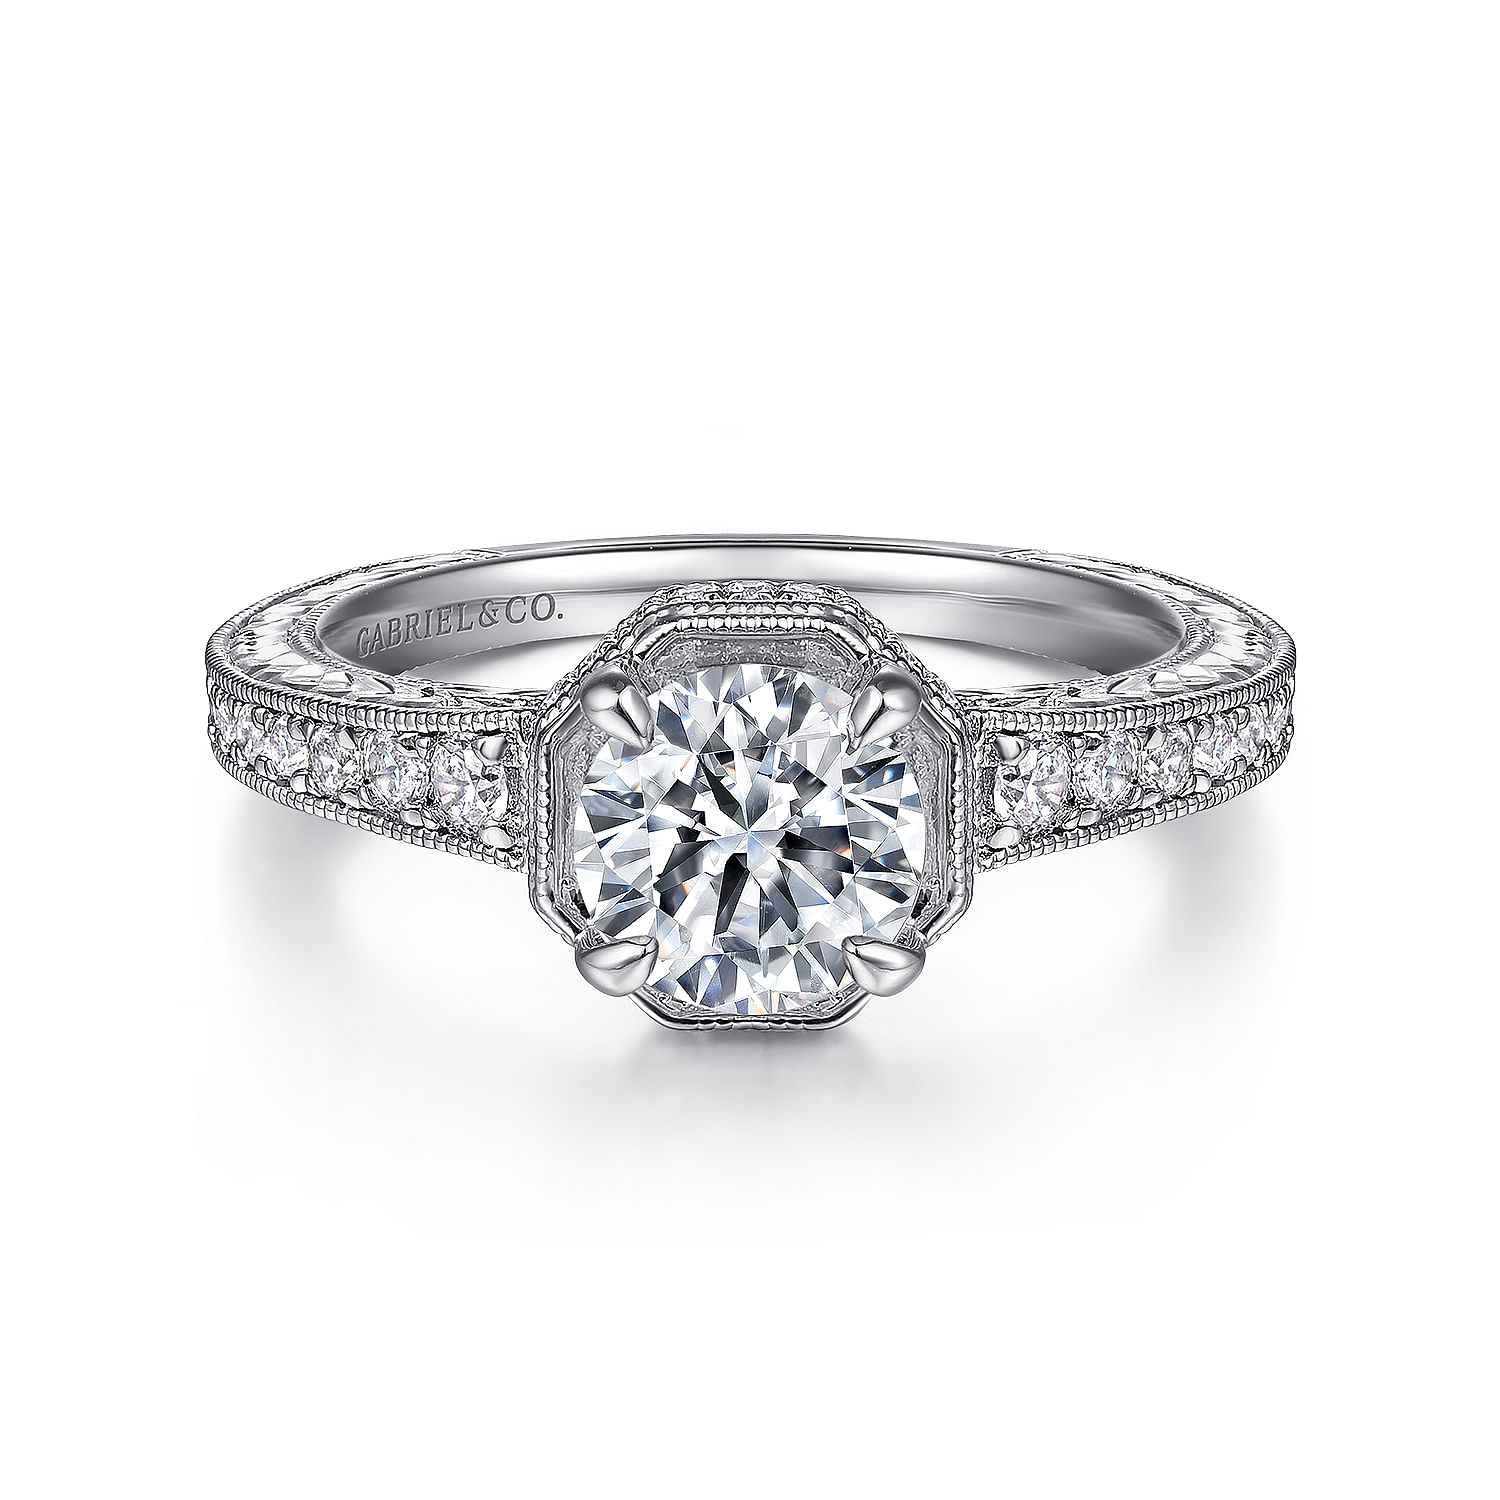 Vintage Inspired 14K White Gold Hidden Halo Round Diamond Engagement Ring